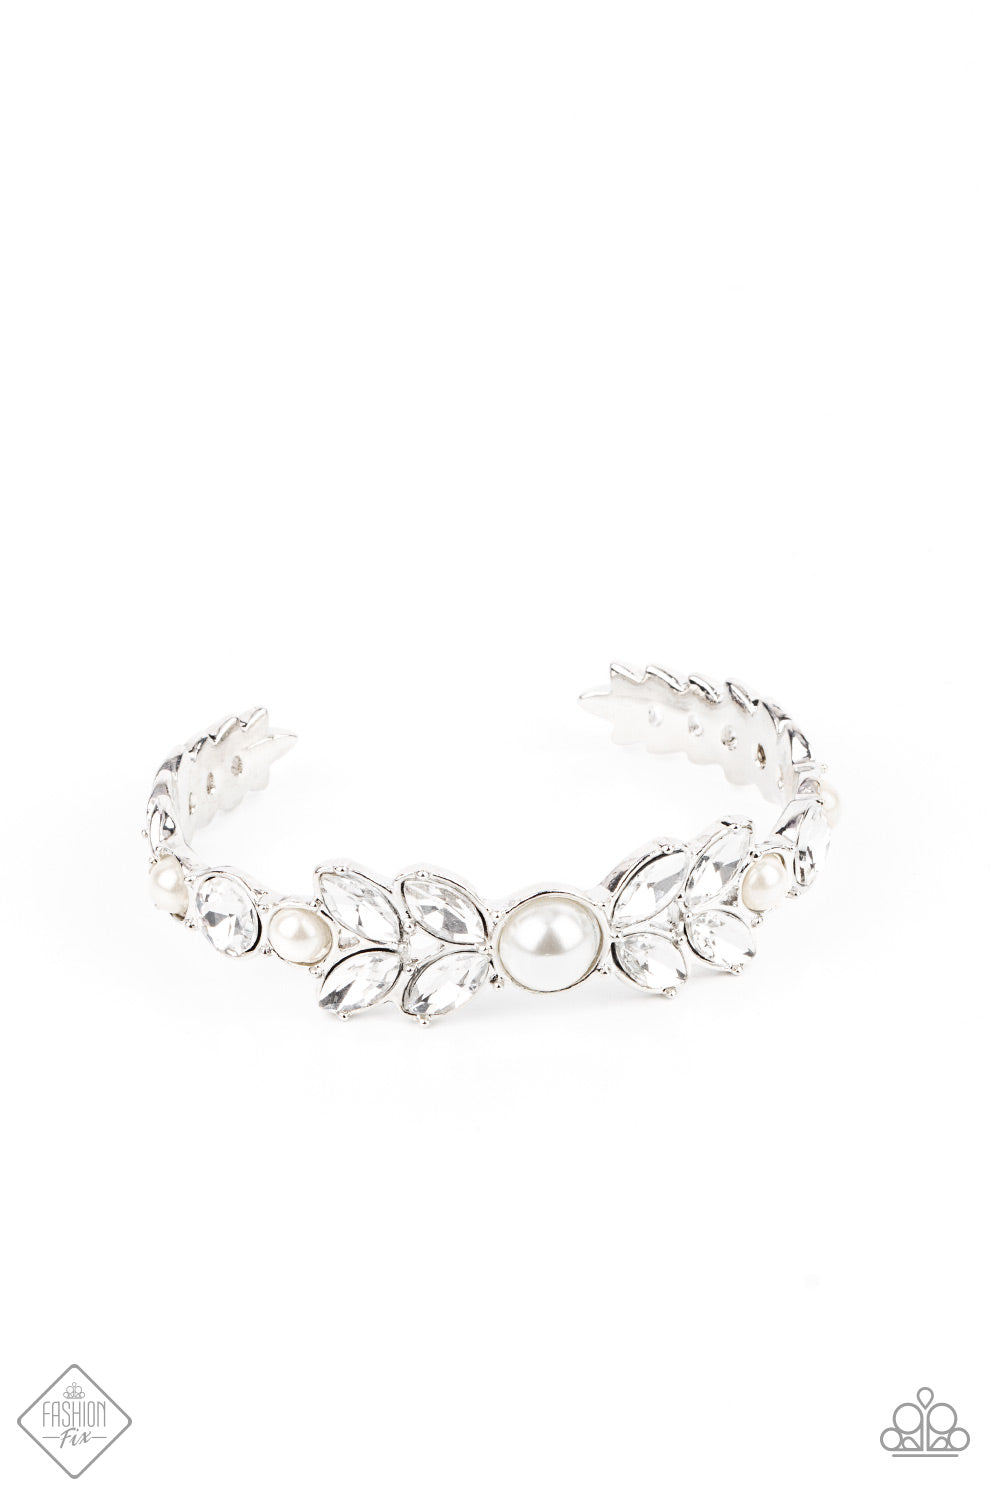 Regal Reminiscence
White Cuff Bracelet - Daria's Blings N Things